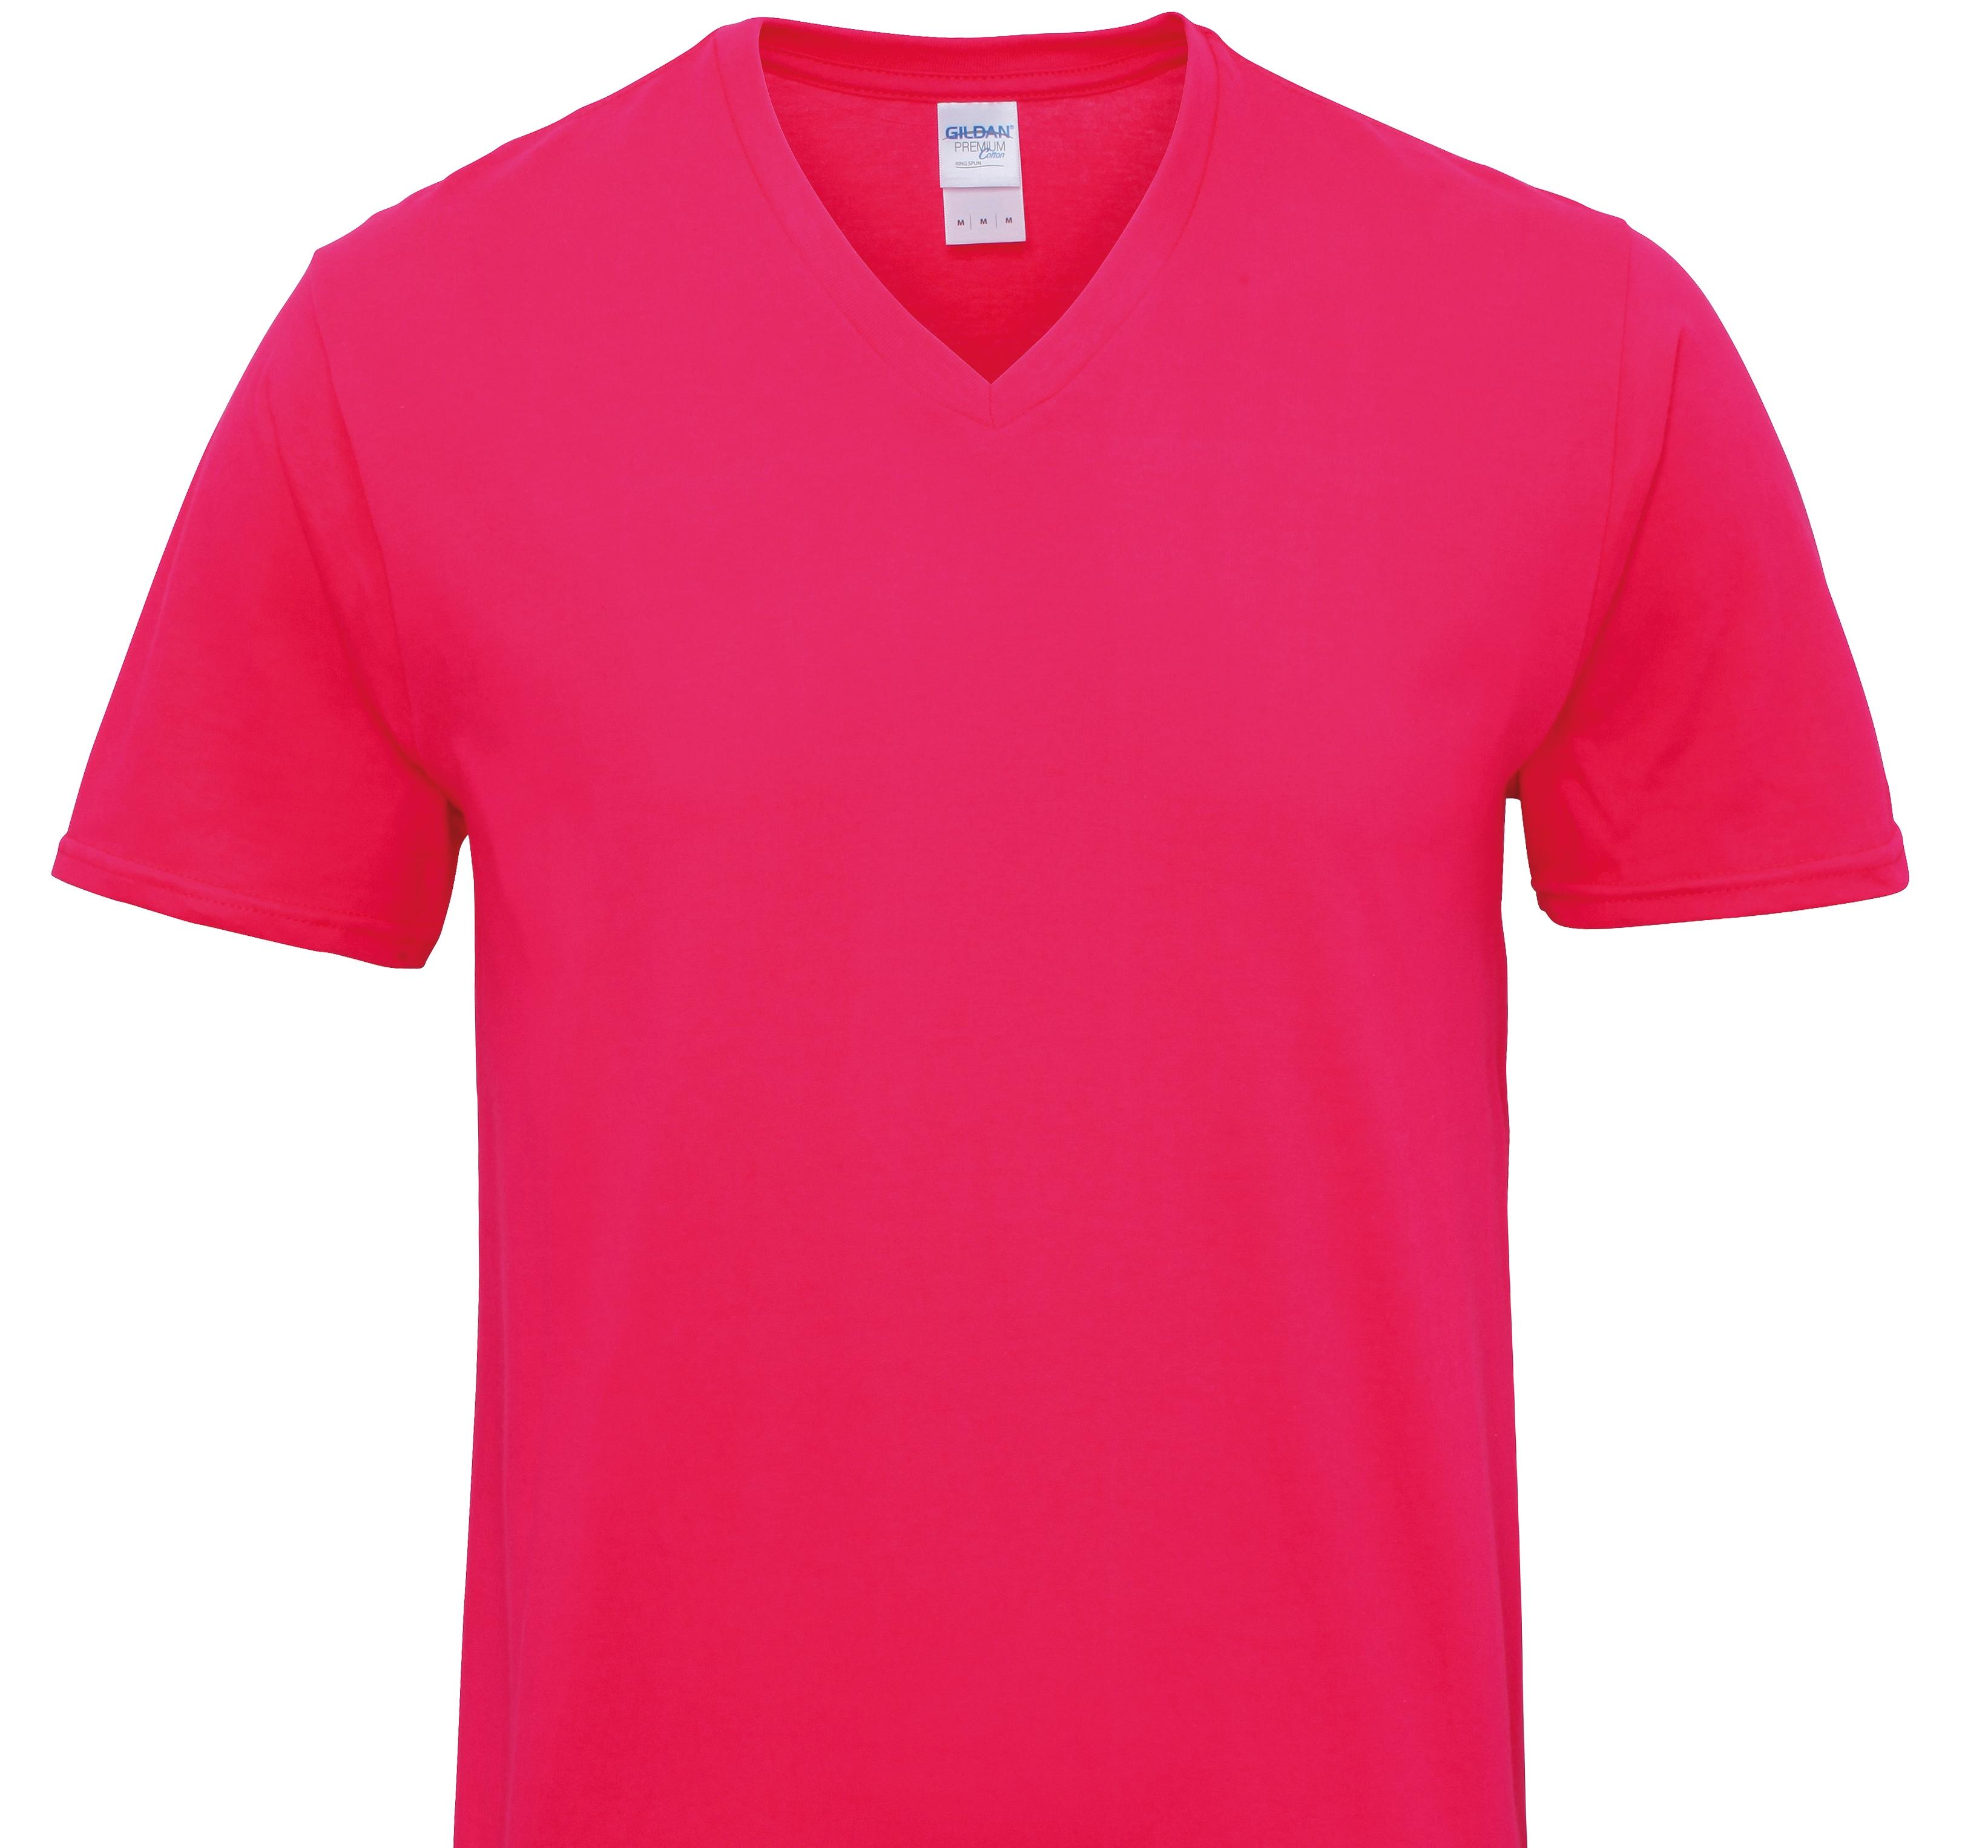 English Cocker Spaniel T-Shirts Women's V Neck Premium Cotton